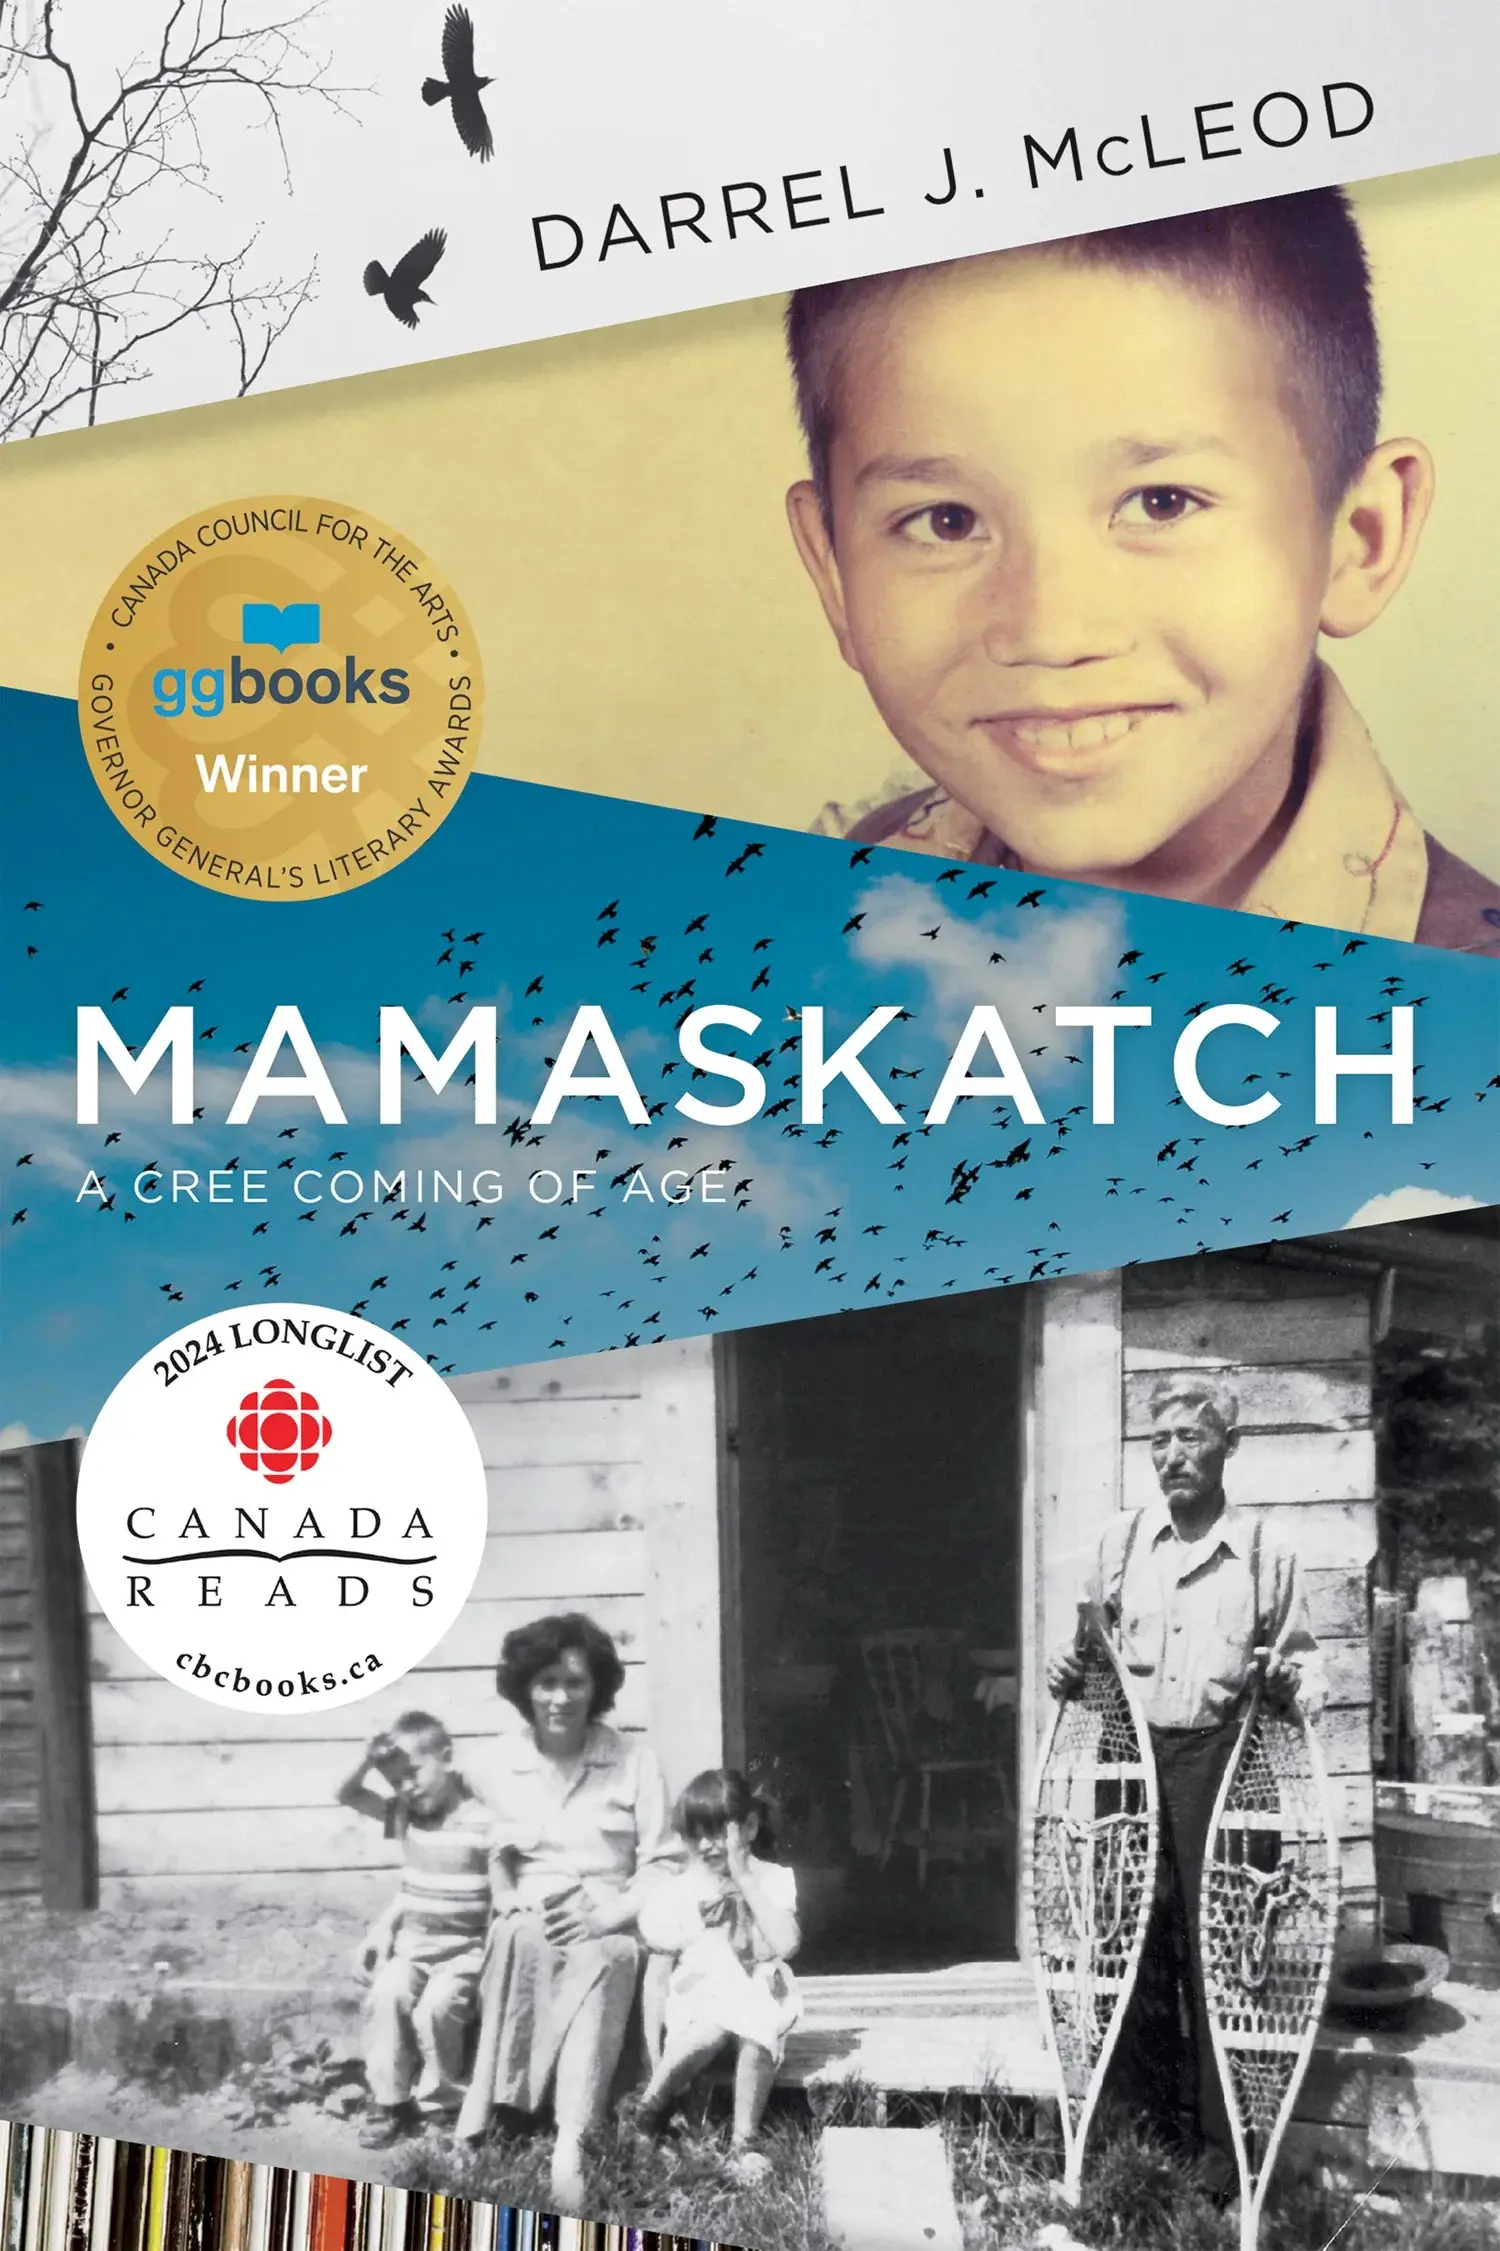 Mamaskatch book cover image